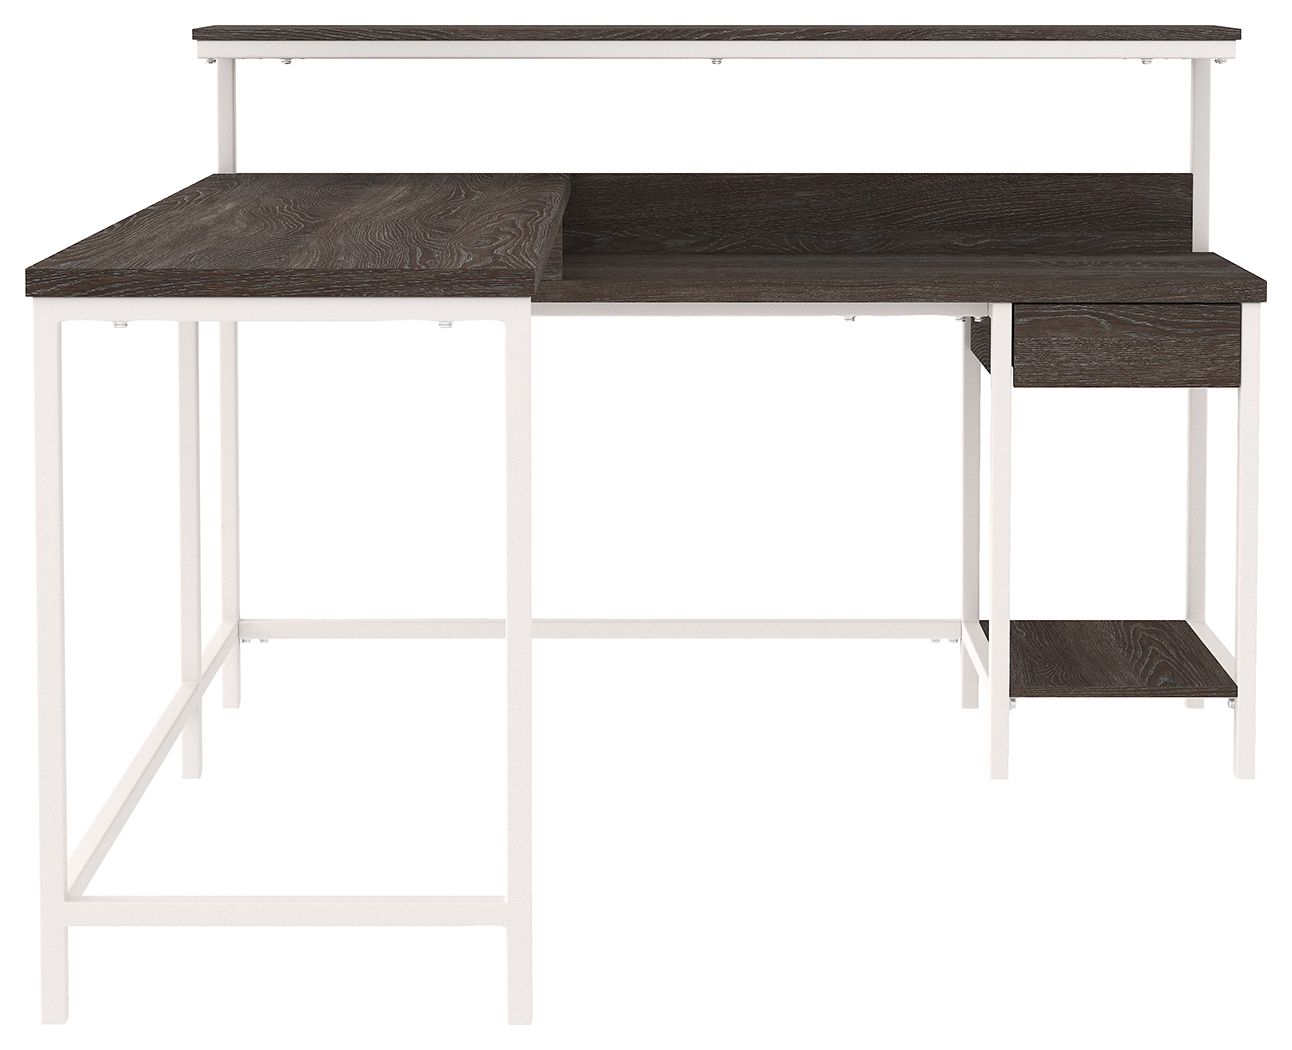 Dorrinson - White / Black / Gray - L-desk With Storage